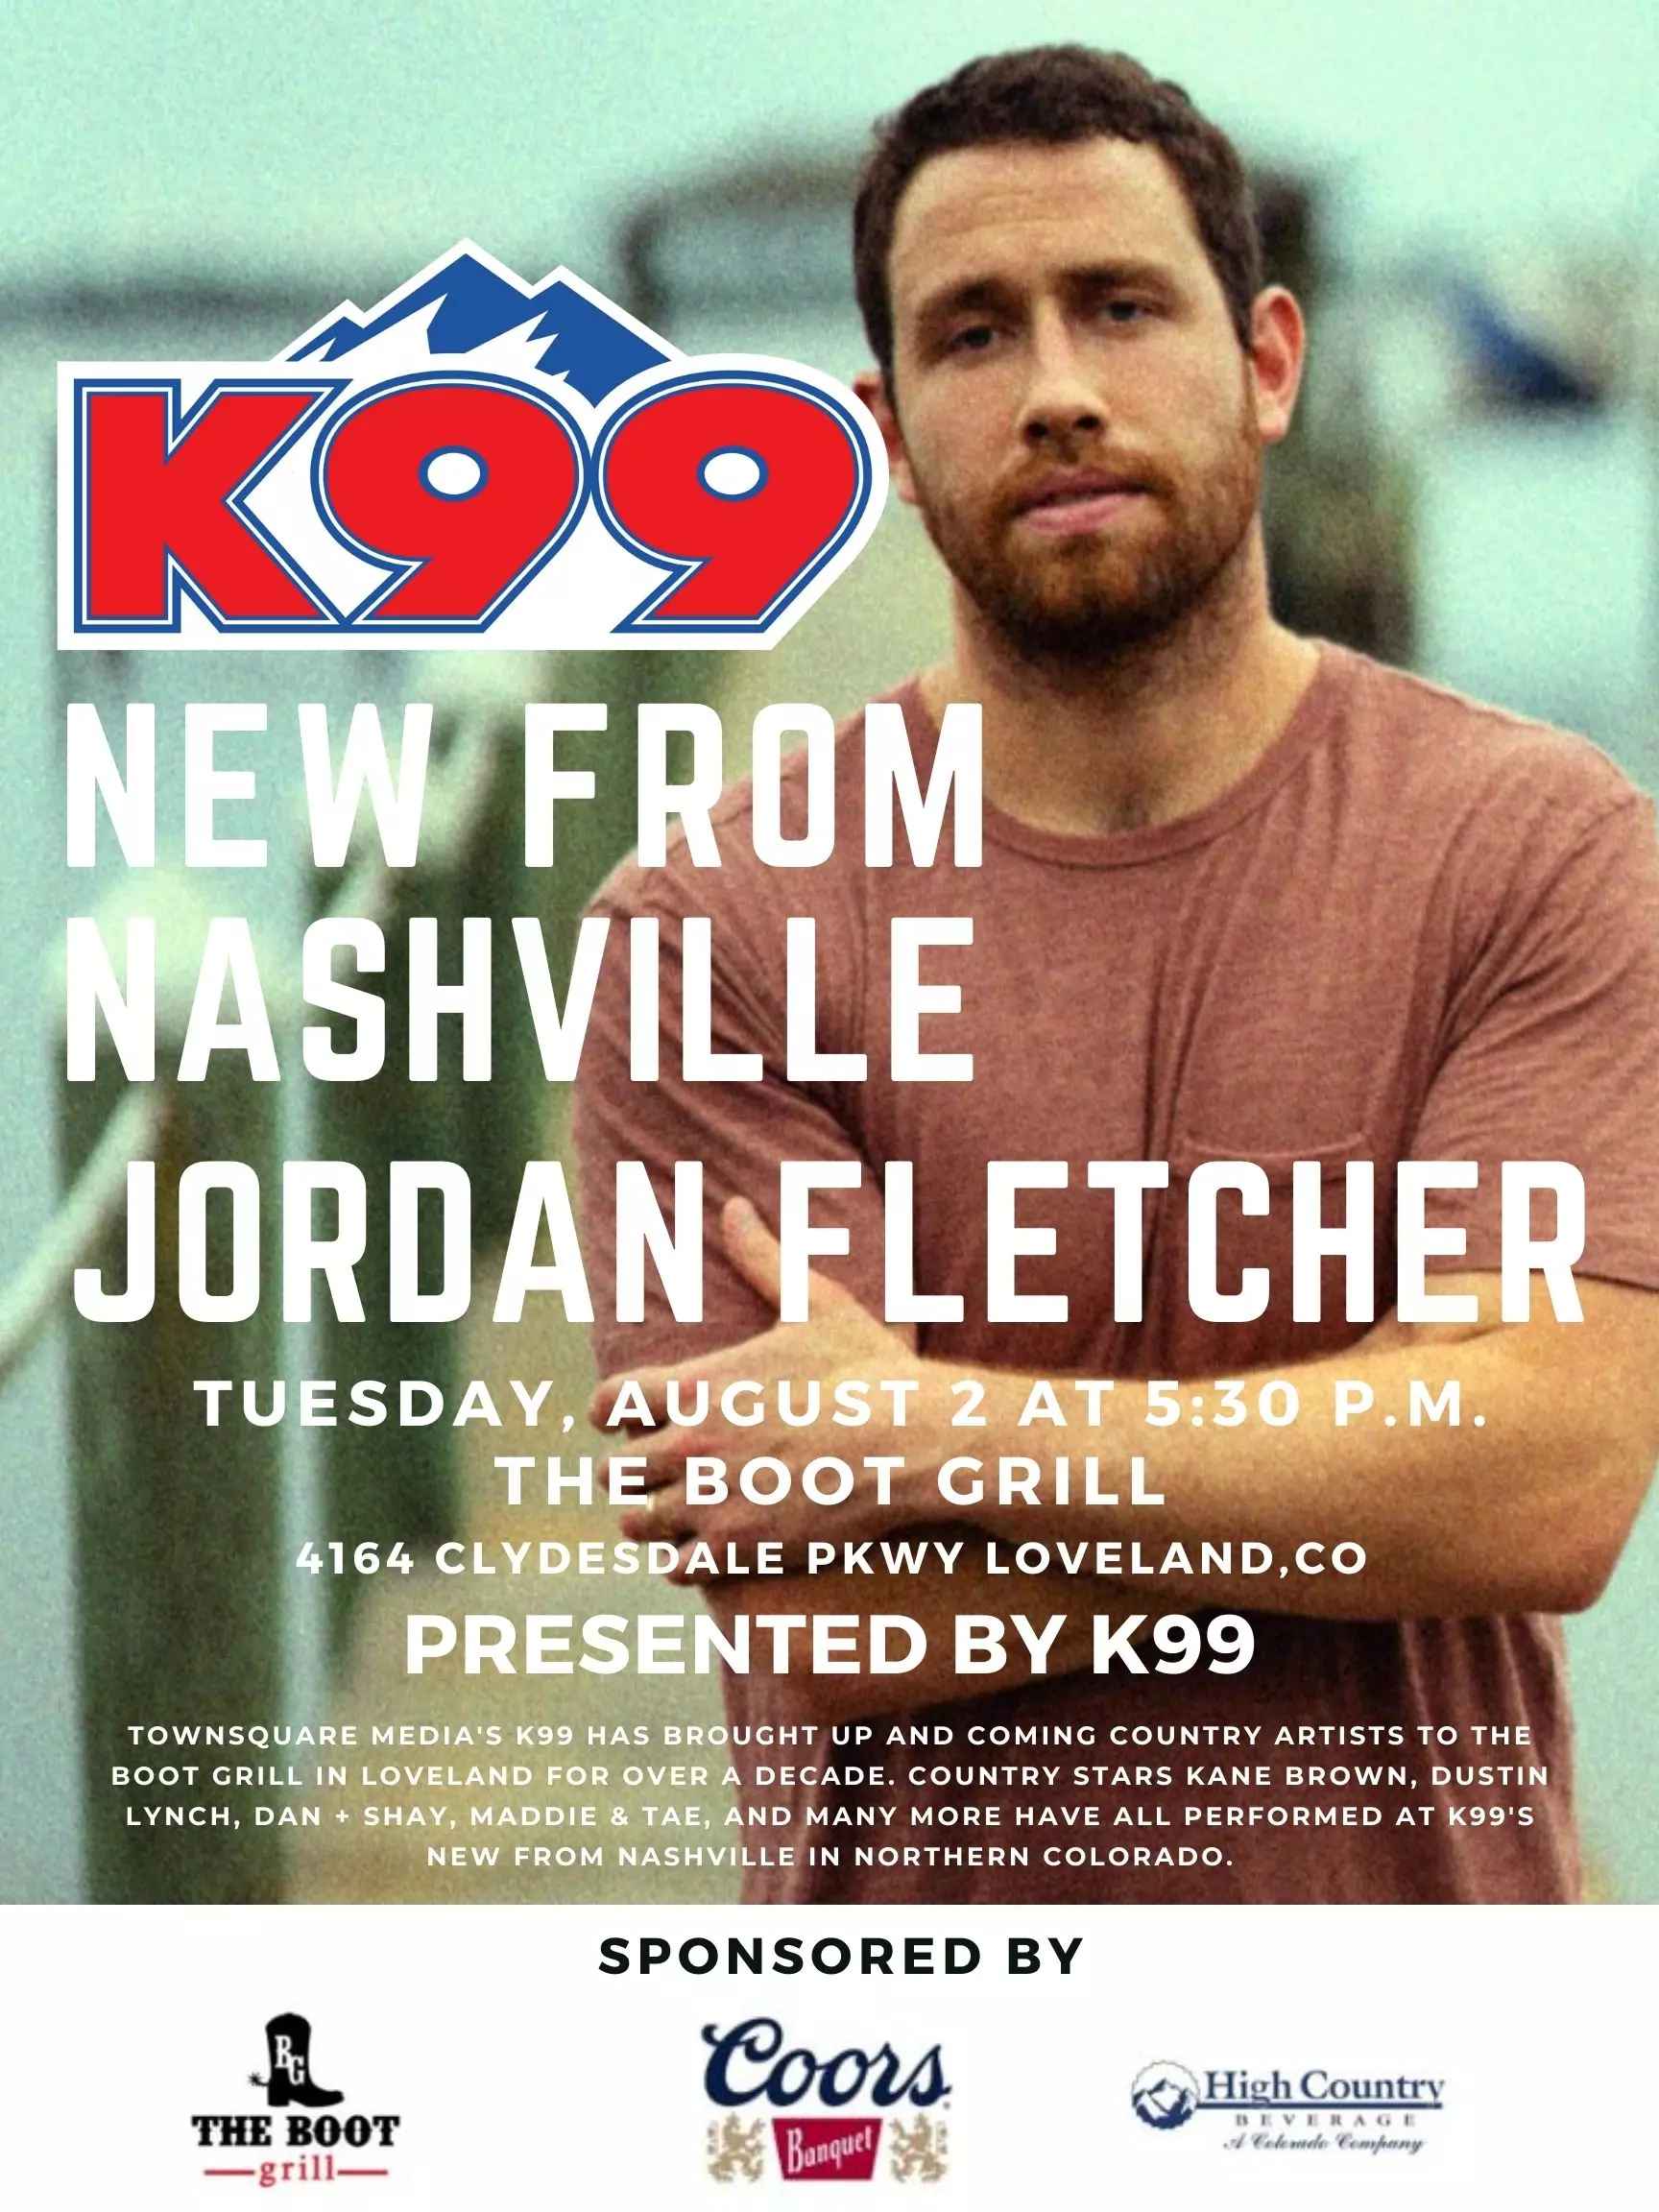 New From Nashville With Jordan Fletcher